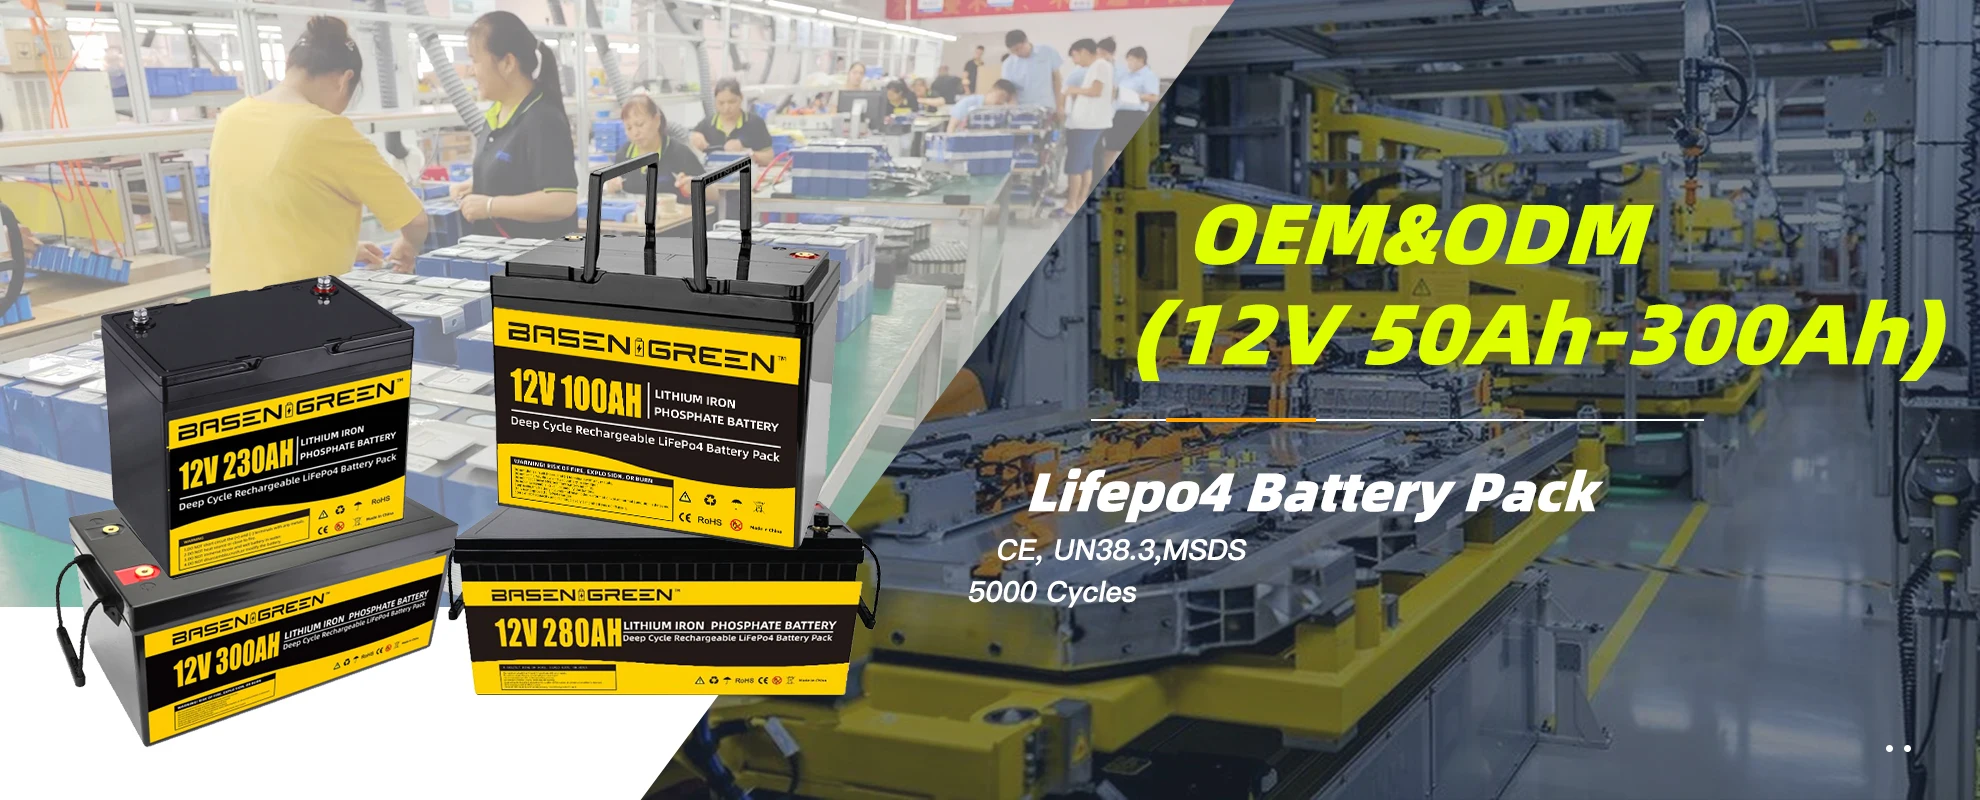 Basengreen 24V 100ah LiFePO4 Lithium Iron Battery Max 5000 Cycle Times -  BASEN